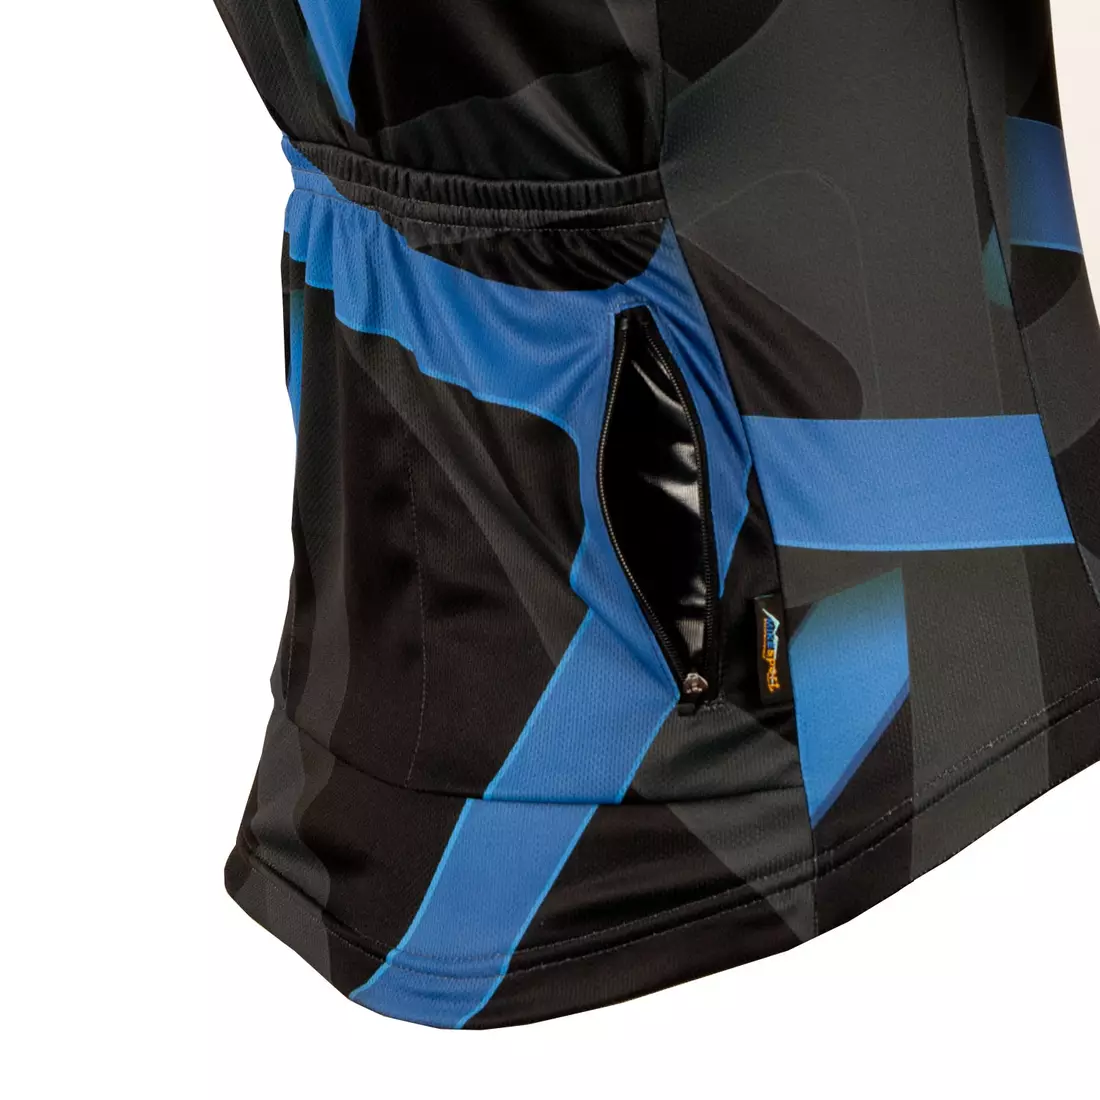 KAYMAQ DESIGN M36 men's cycling jersey, blue